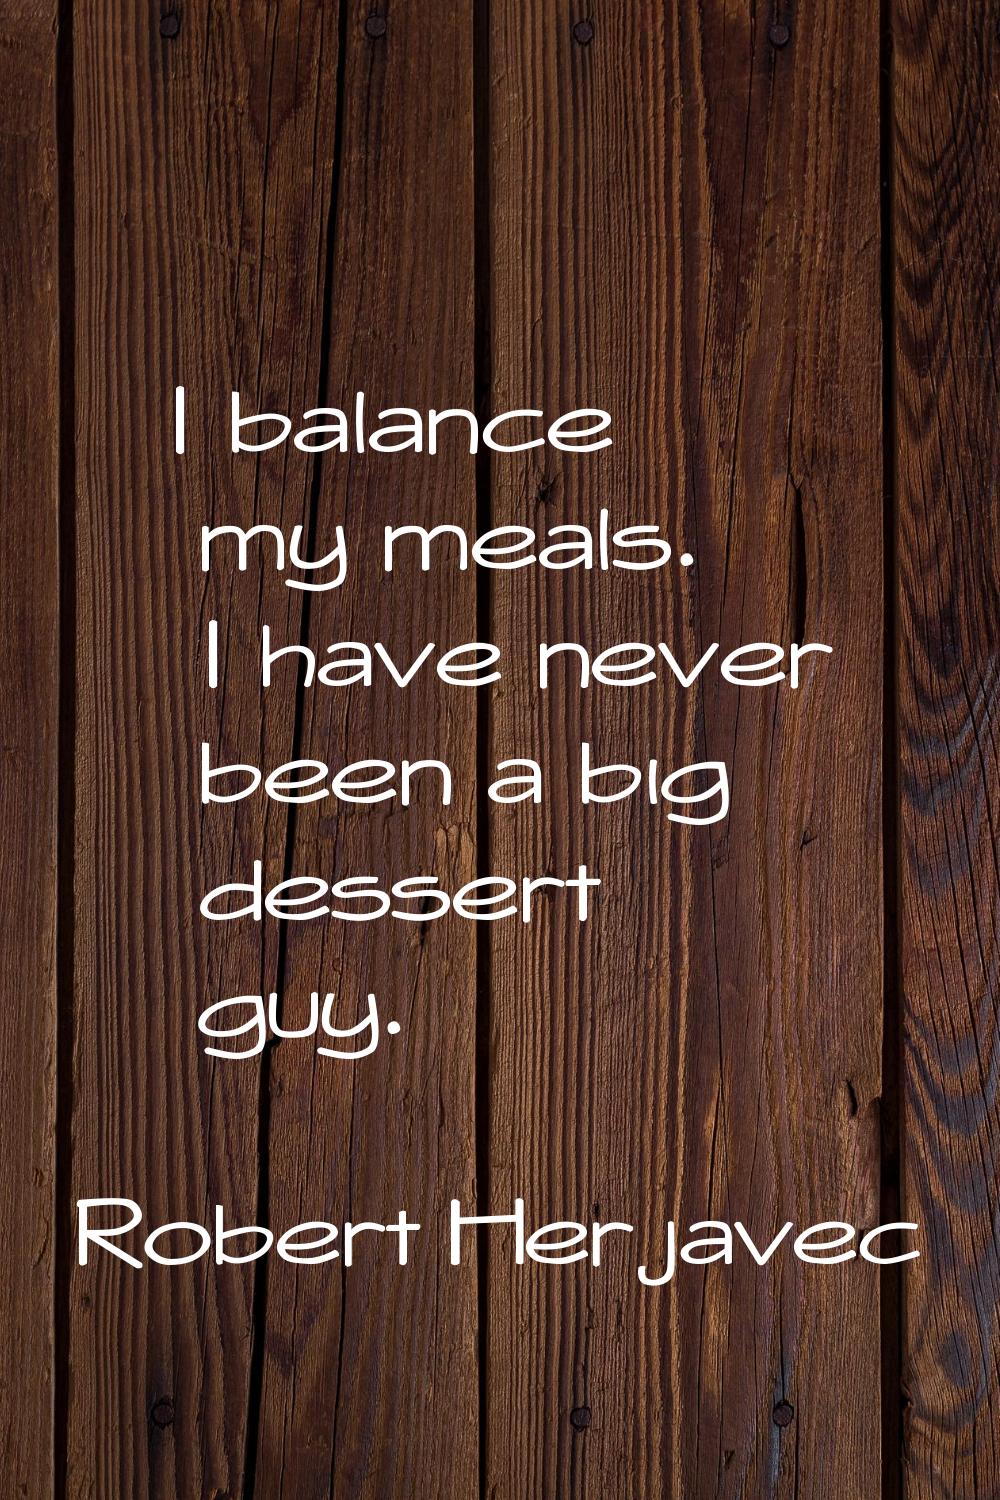 I balance my meals. I have never been a big dessert guy.